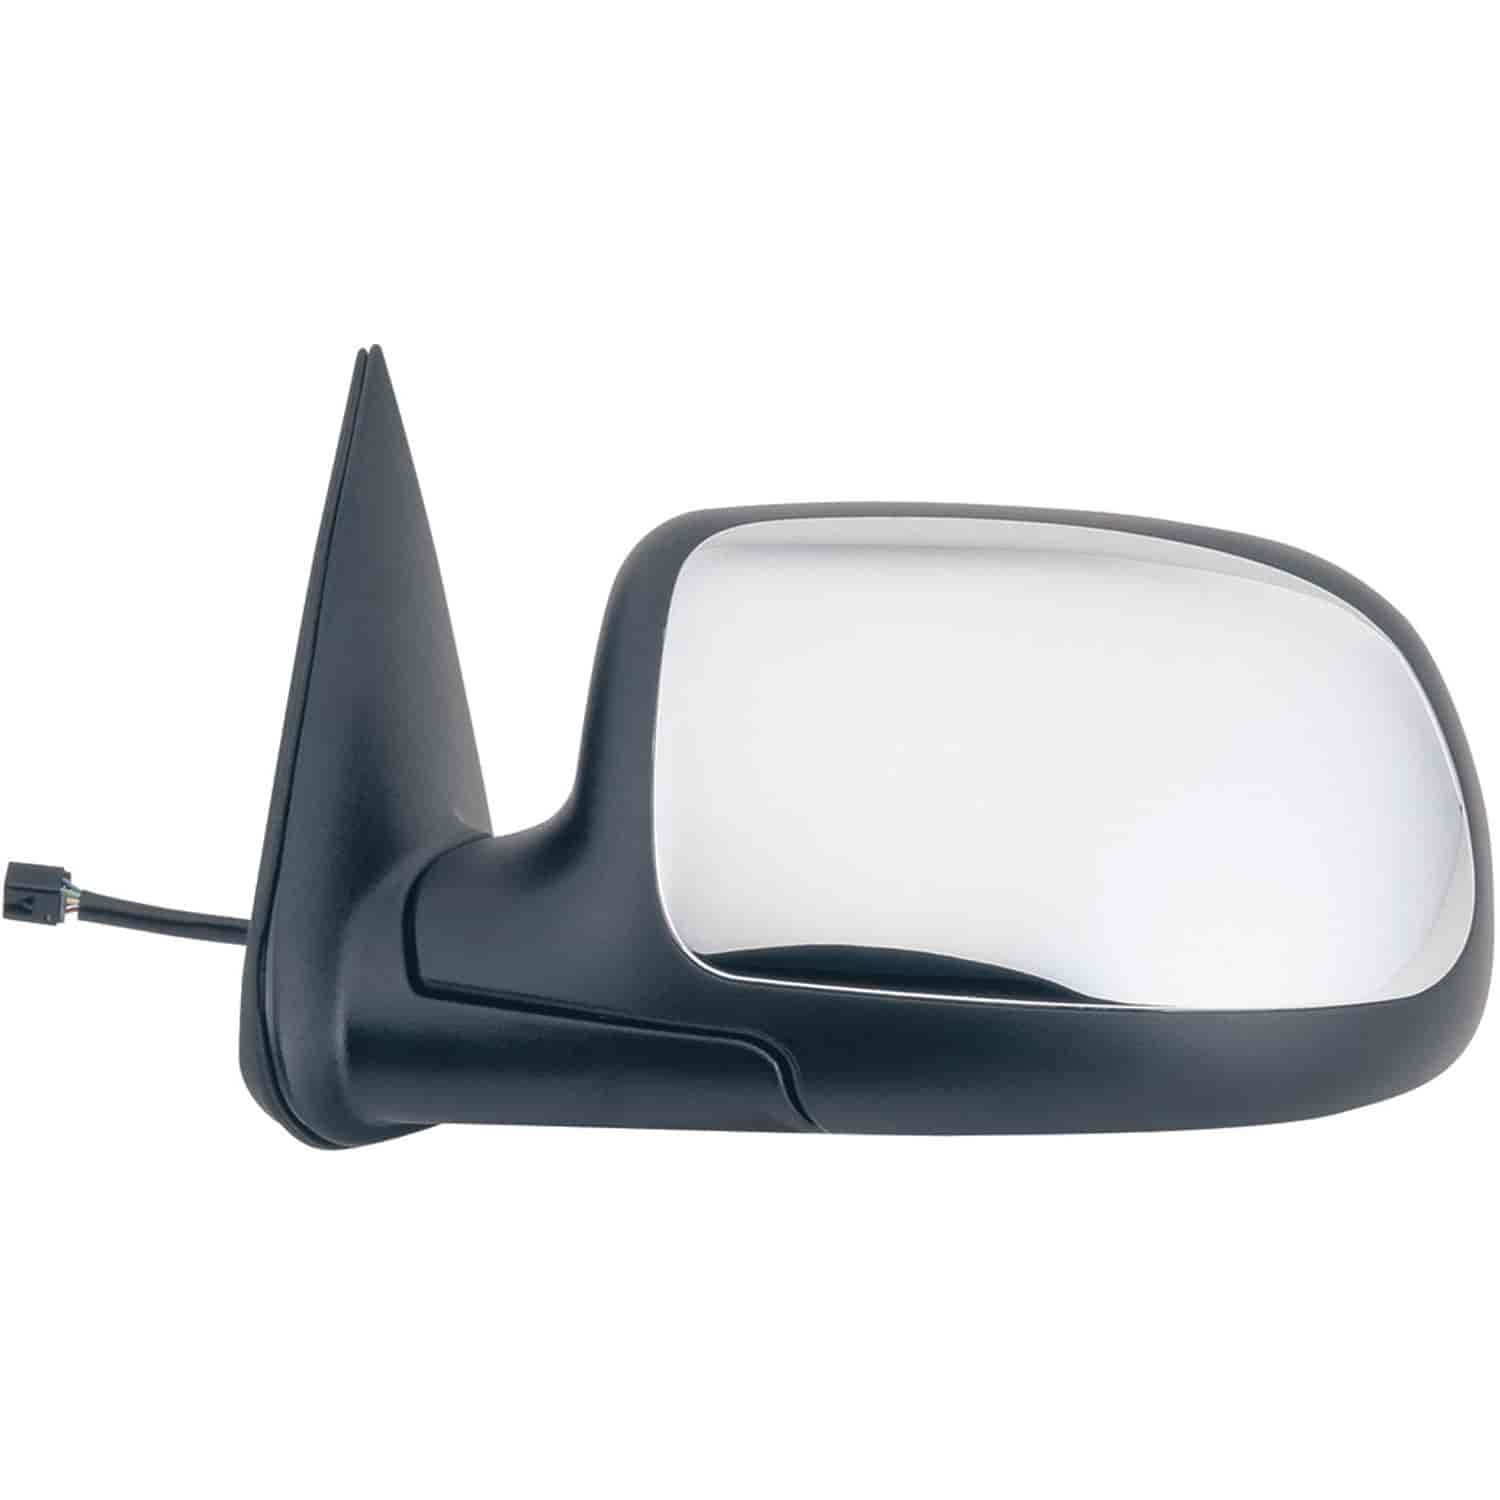 OEM Style Replacement mirror for 00-02 Chevy Silverado GMC Sierra 00-02Suburban/ Tahoe/ Denali XL/ Y